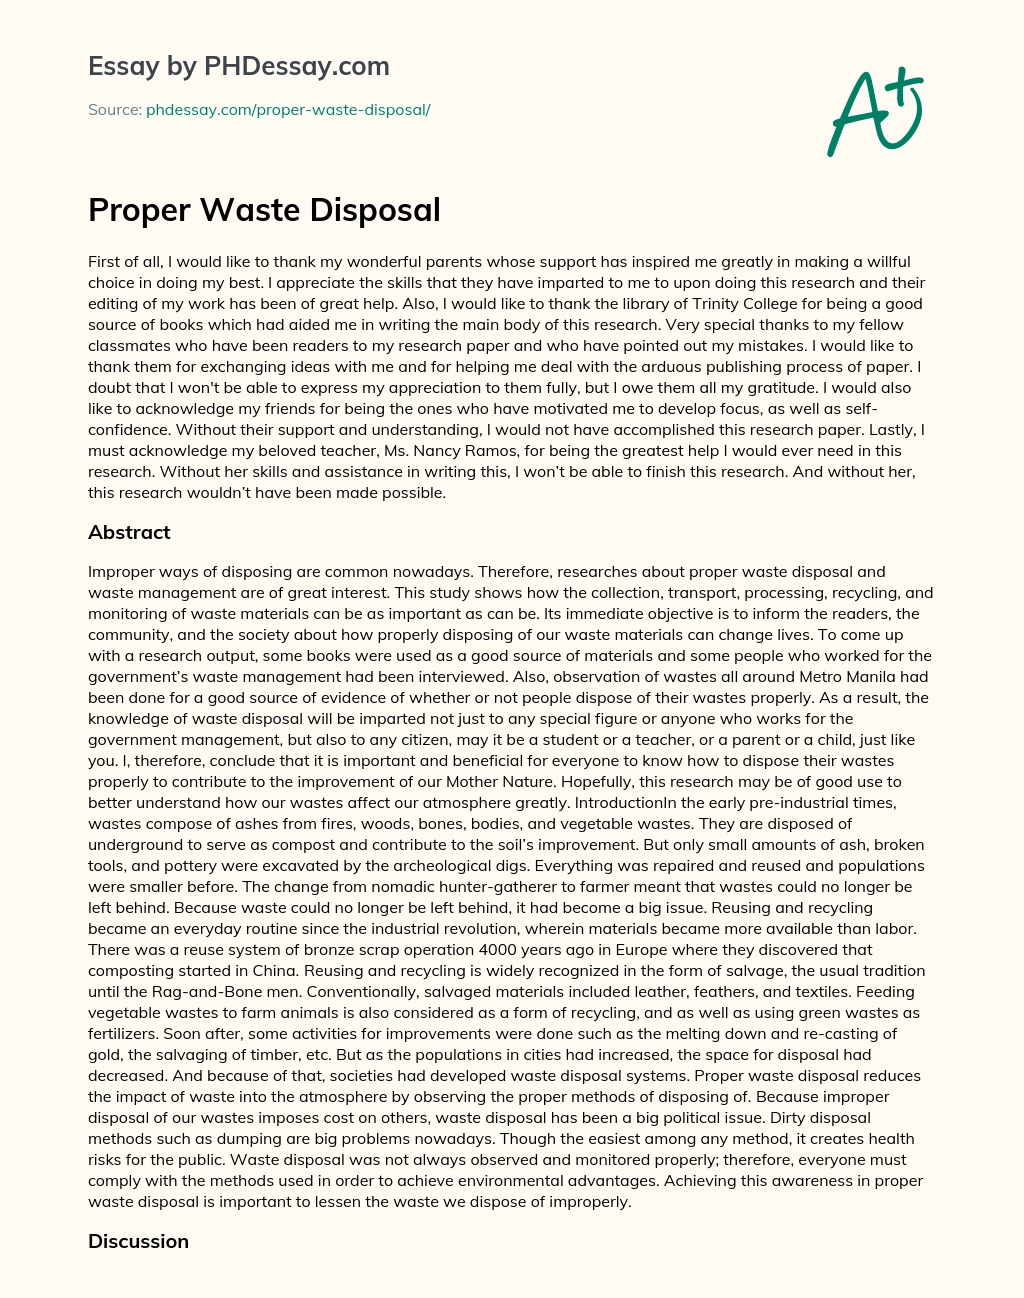 Proper Waste Disposal essay